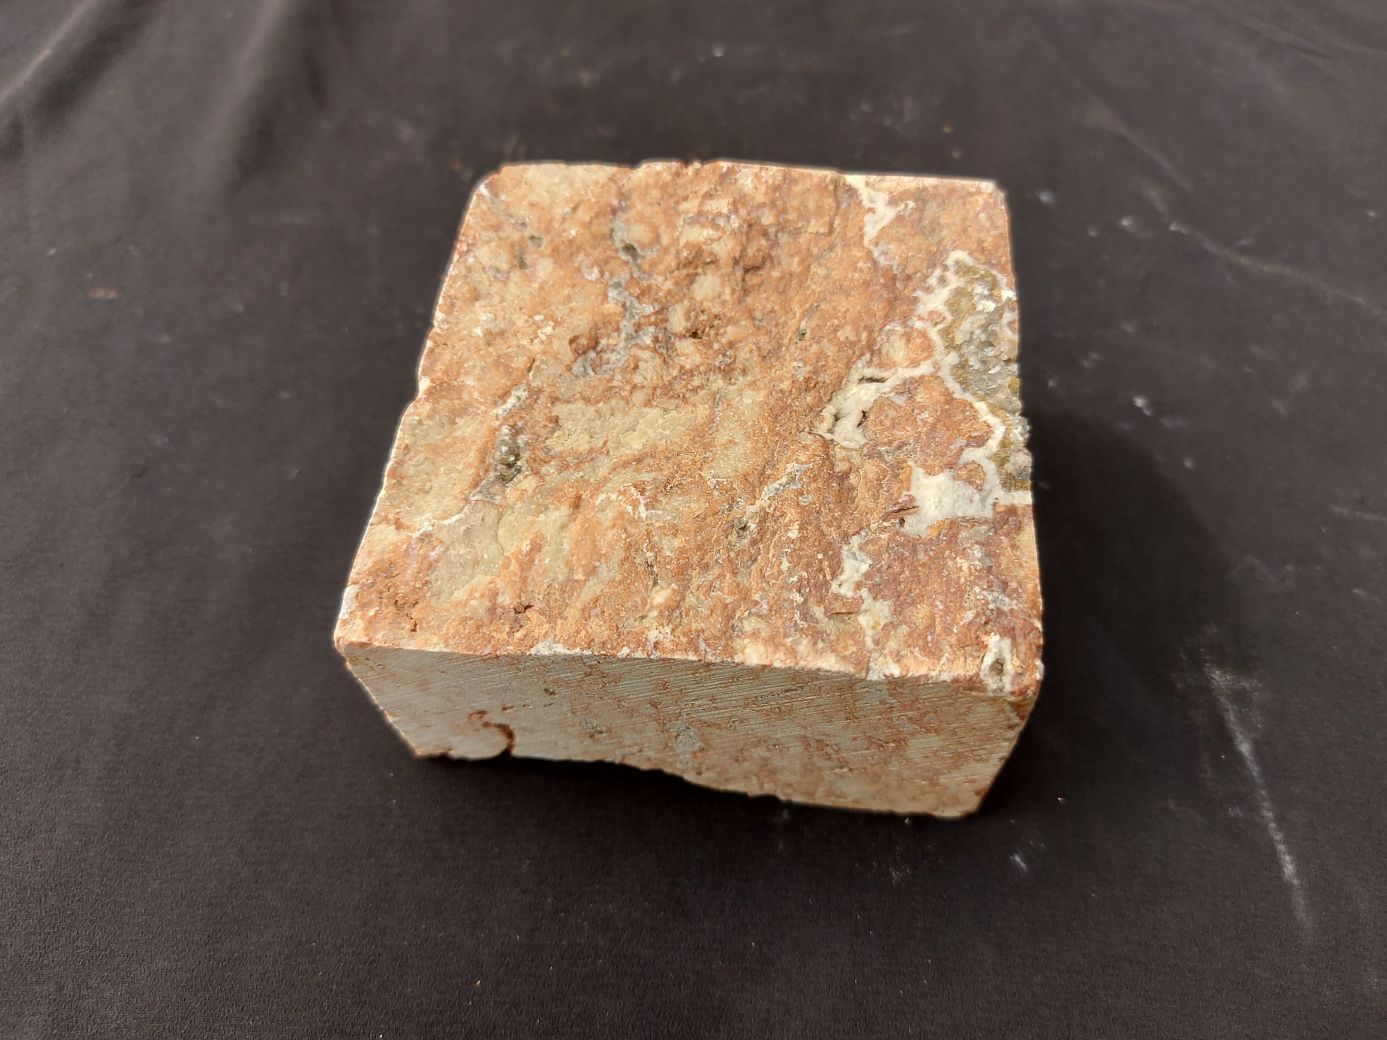 Cubic Isp stone